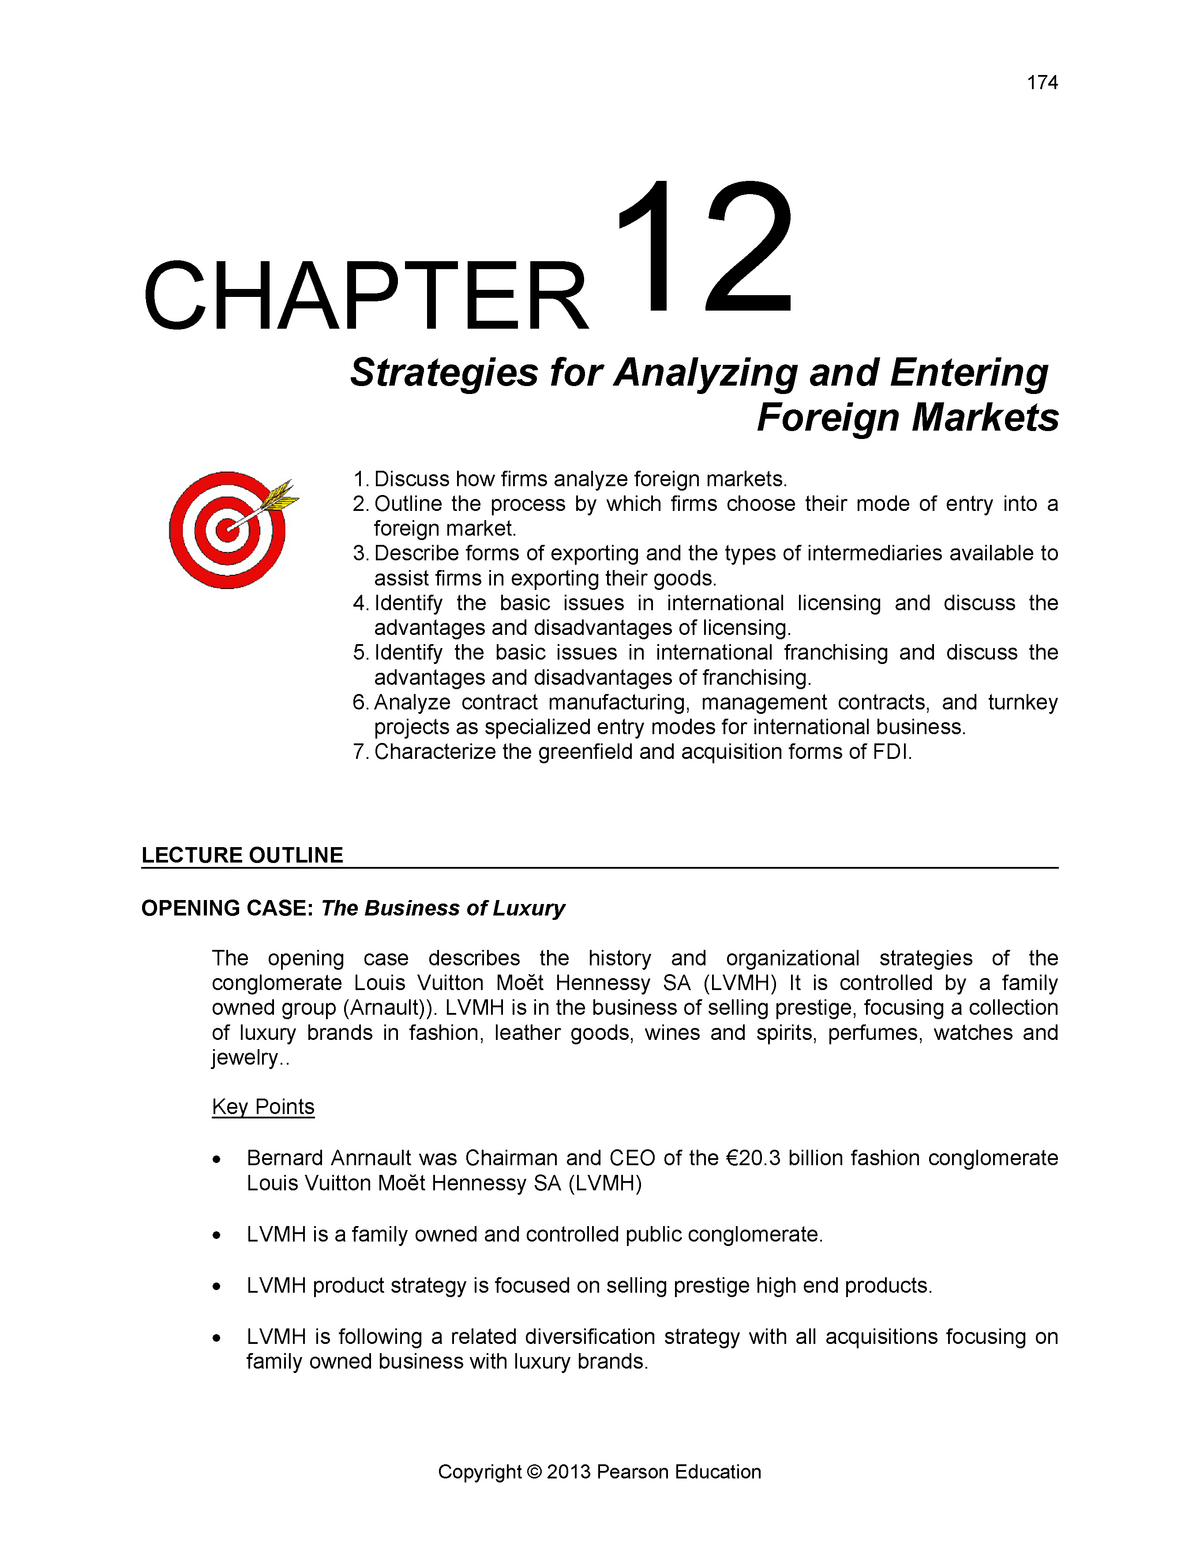 Slide C9 MGT361 - BA240 - UiTM CHAPTER 12 Strategies for ...